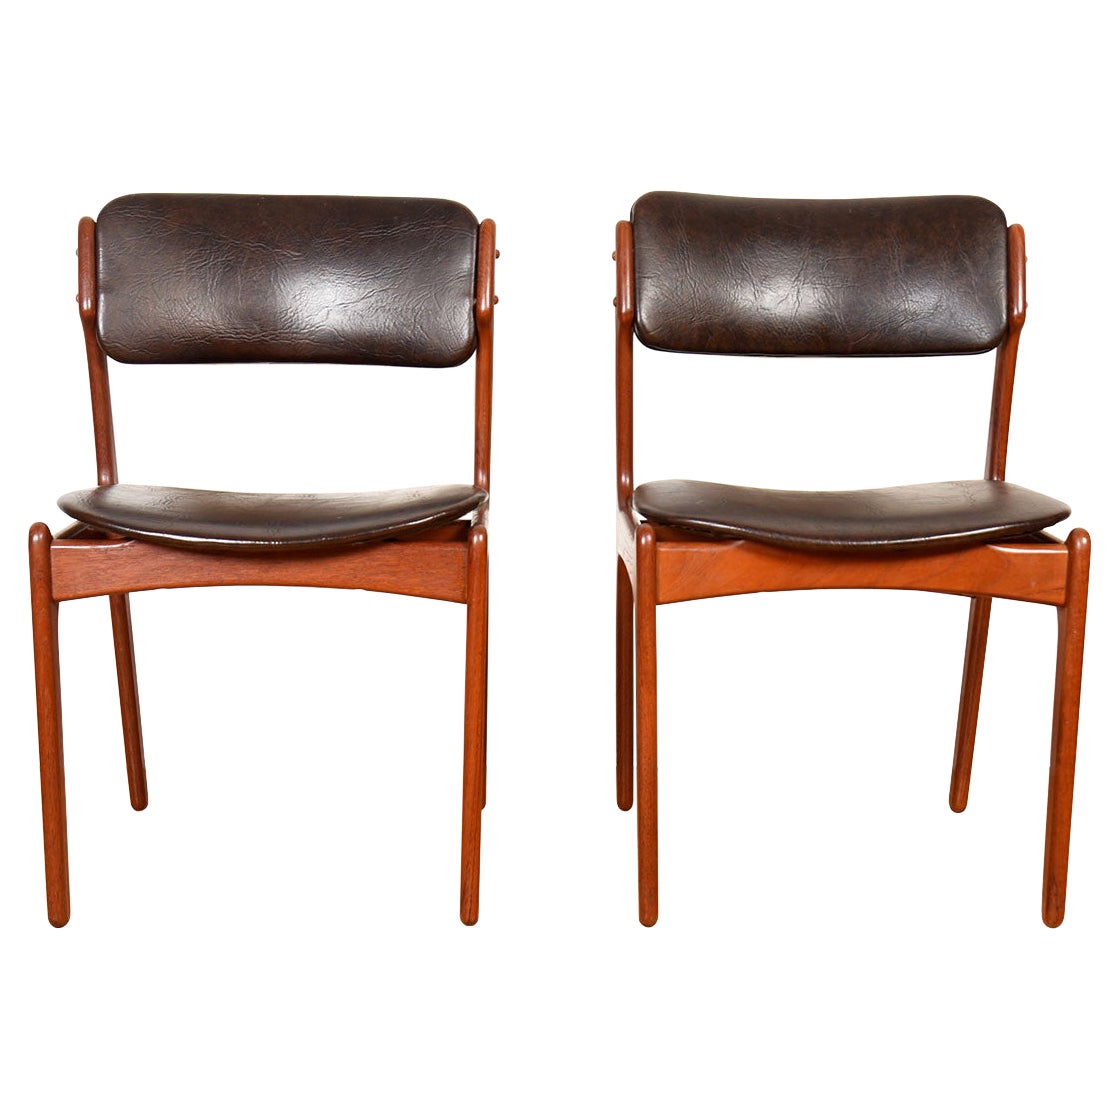 Pair of Danish Teak Dining Chairs in Chocolate Brown by Erik Buch